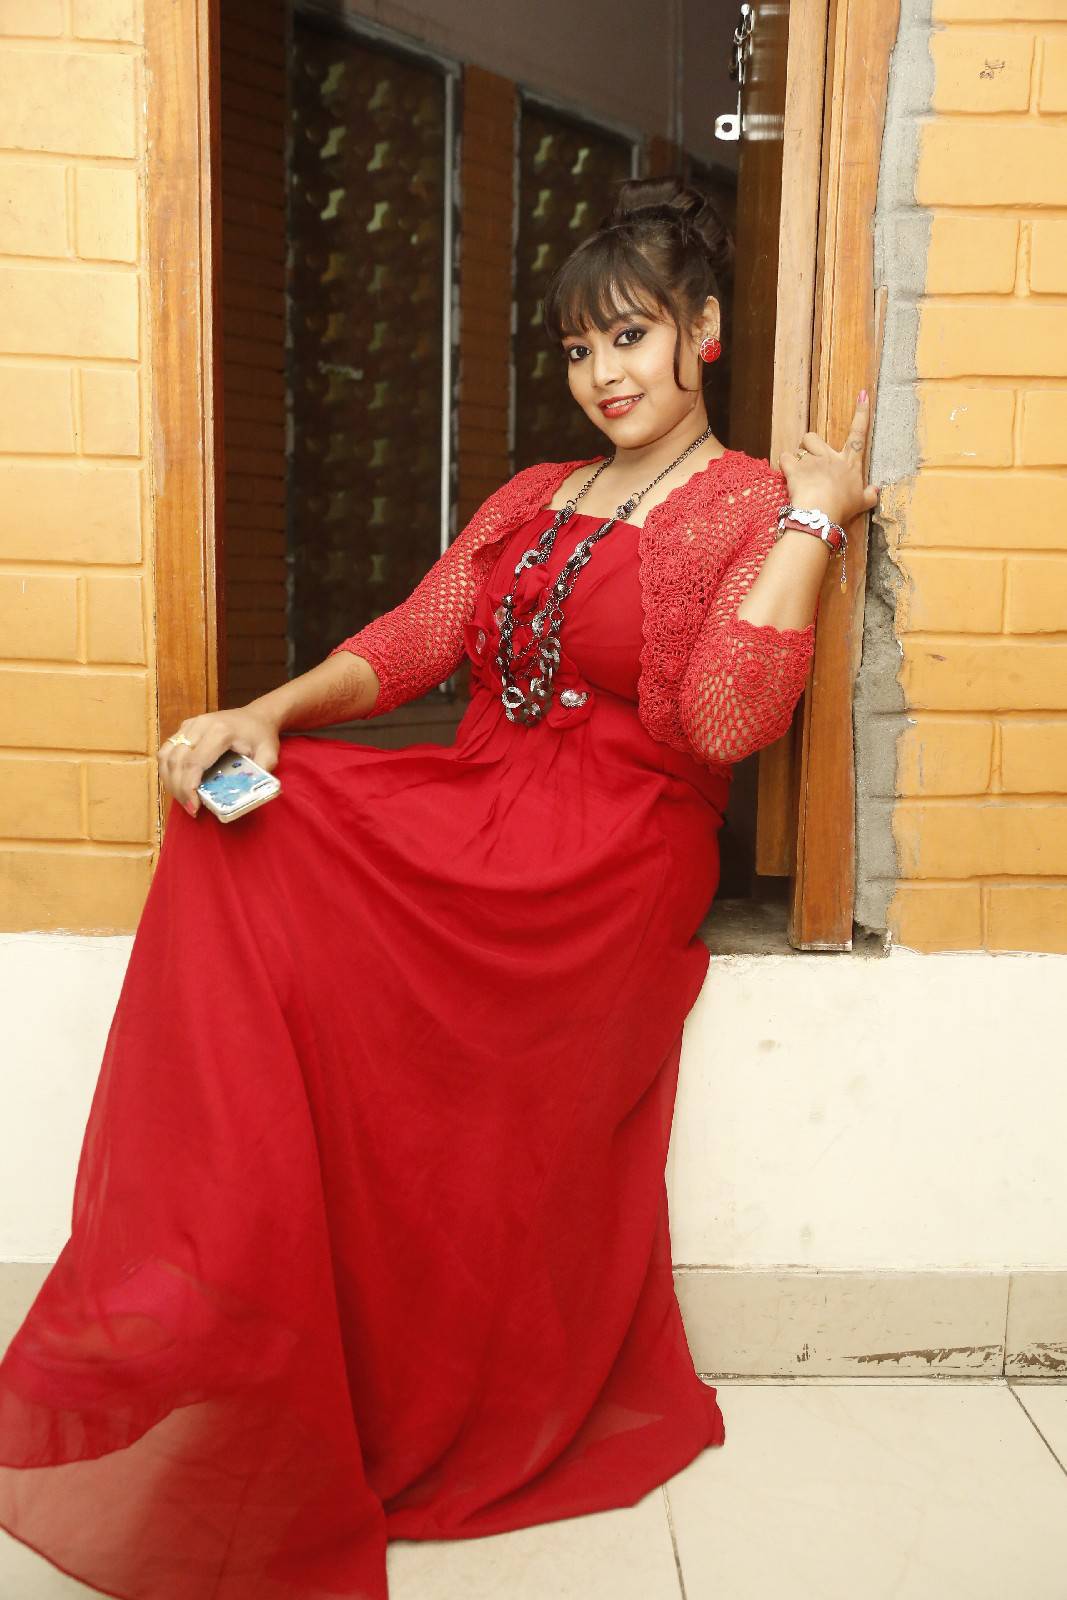 Anusha Latest Photos In Red Dress Indian Girls Villa Celebs Beauty